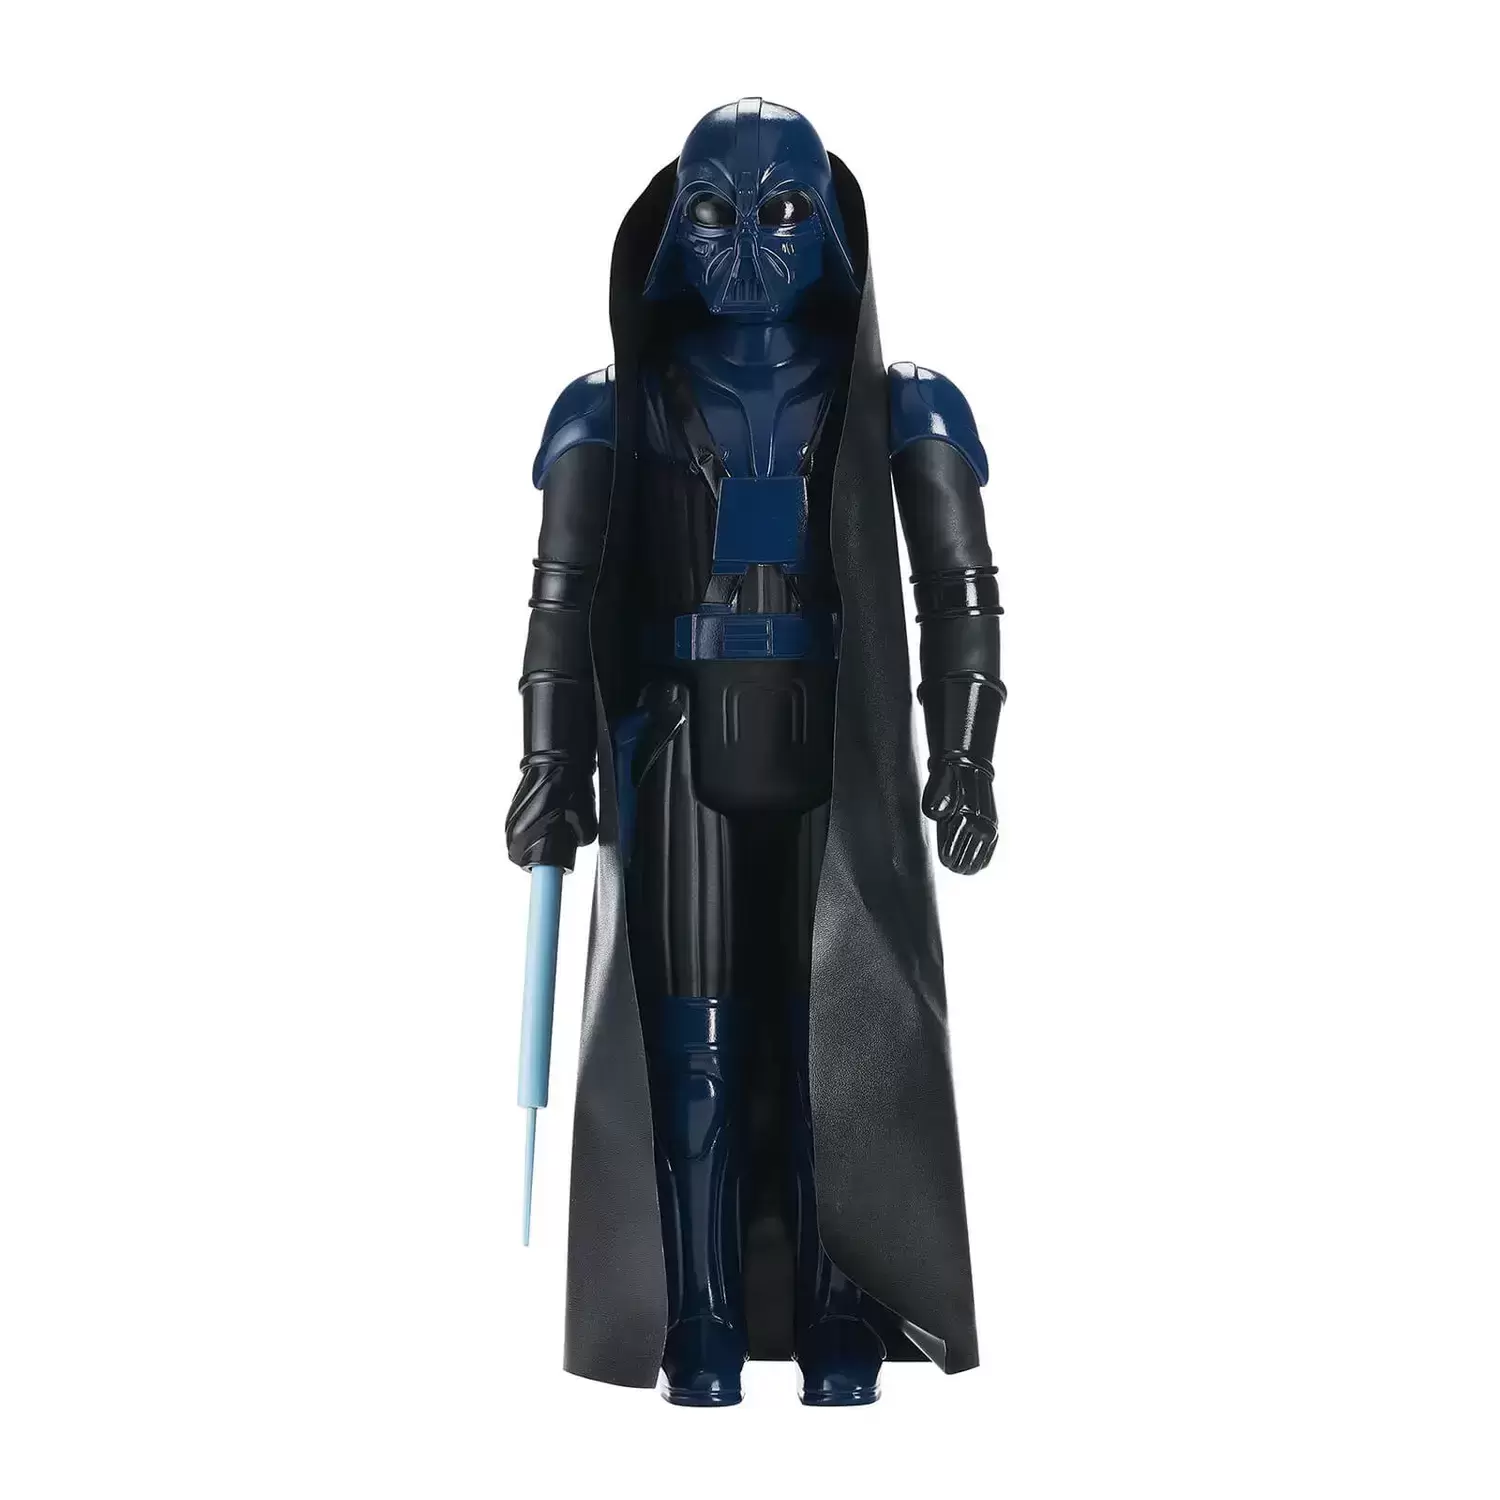 Jumbo Retro figures - Concept Darth Vader